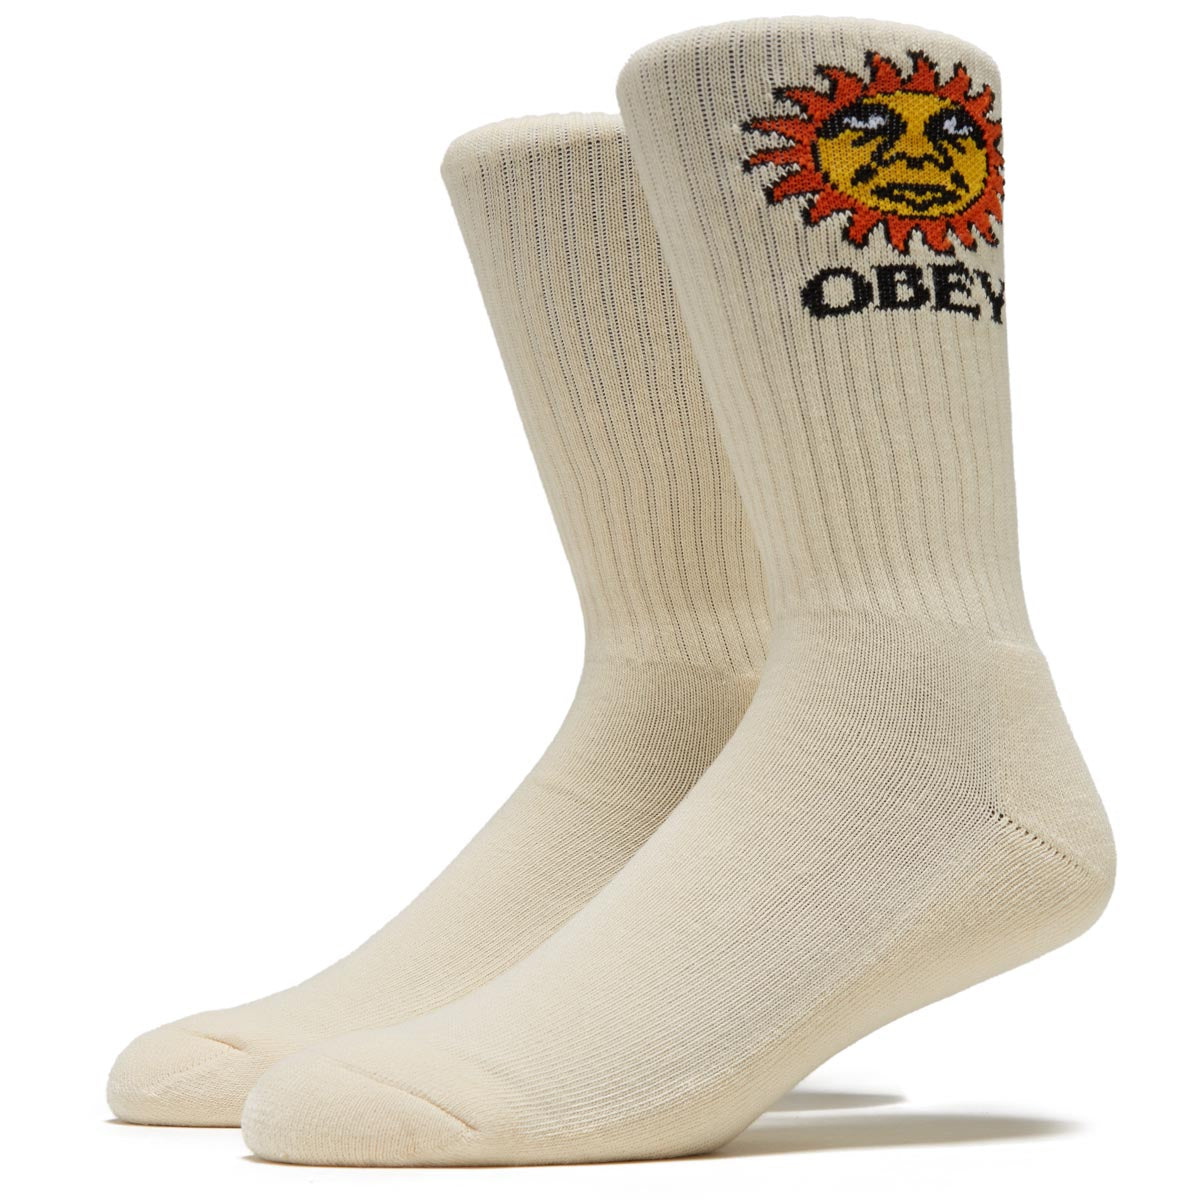 Obey Sunshine Socks - Unbleached image 1